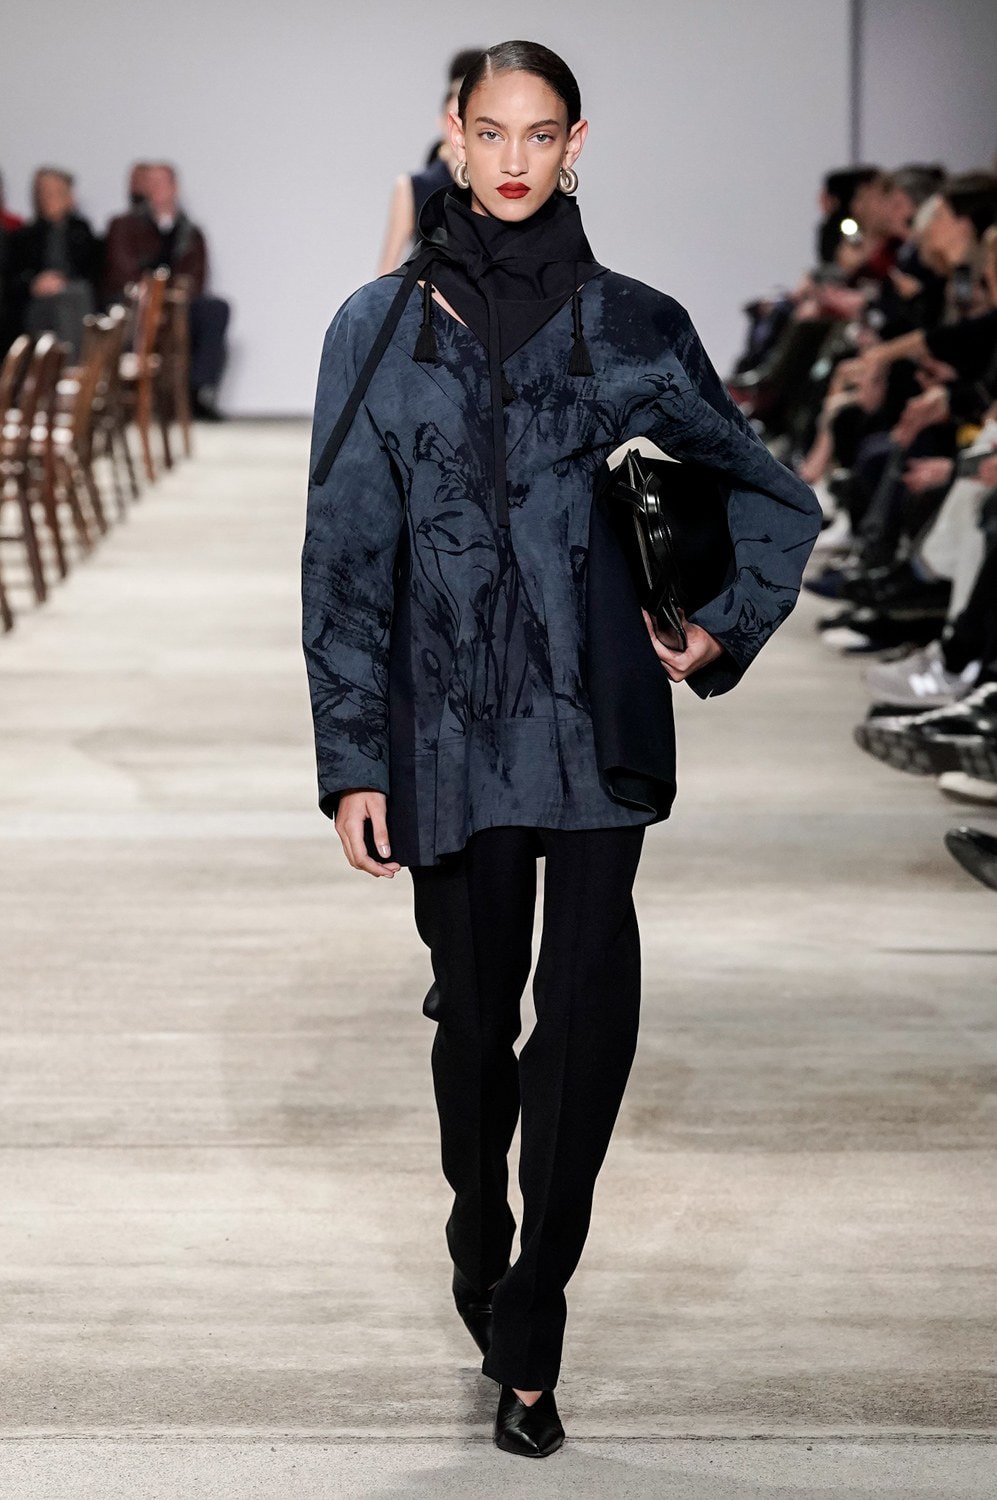 Jil Sander Fall/Winter 2020 Collection Runway Show Floral Tunic Navy Pants Black